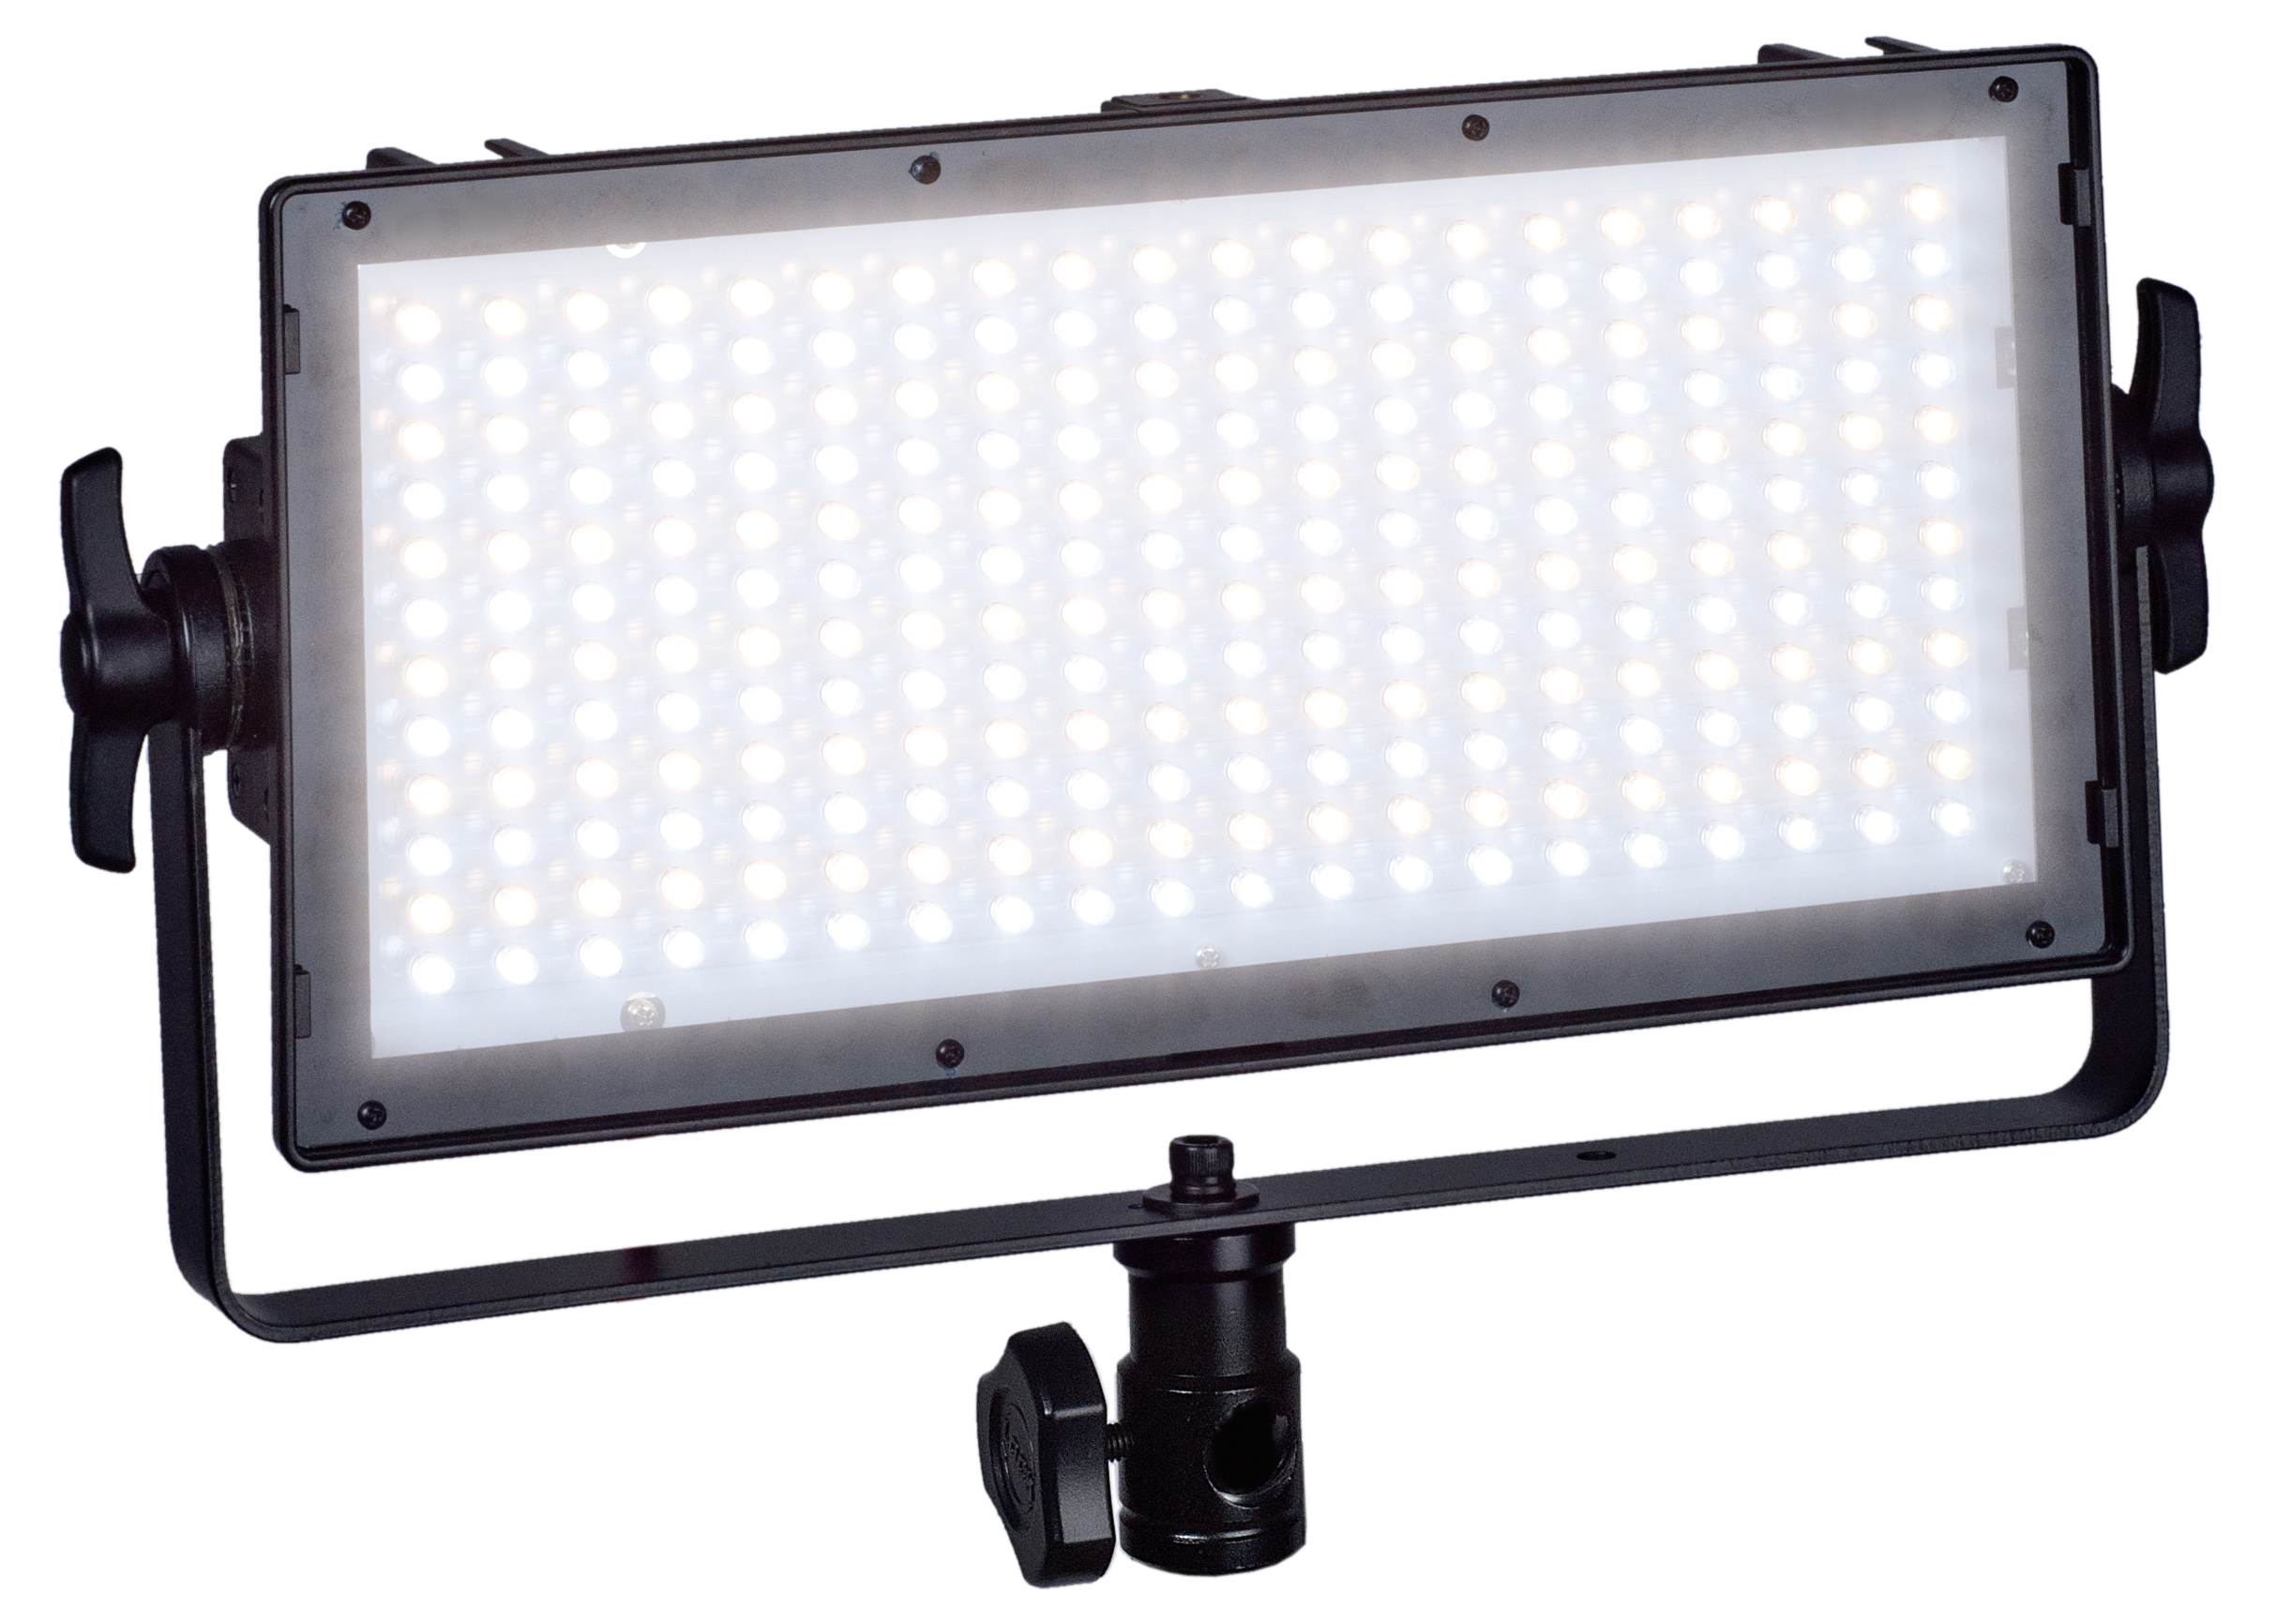 KAISER LED-Flächenleuchte PL 240 Vario, 27x12cm Leuchtfläche, 240 LEDs, dimmbar